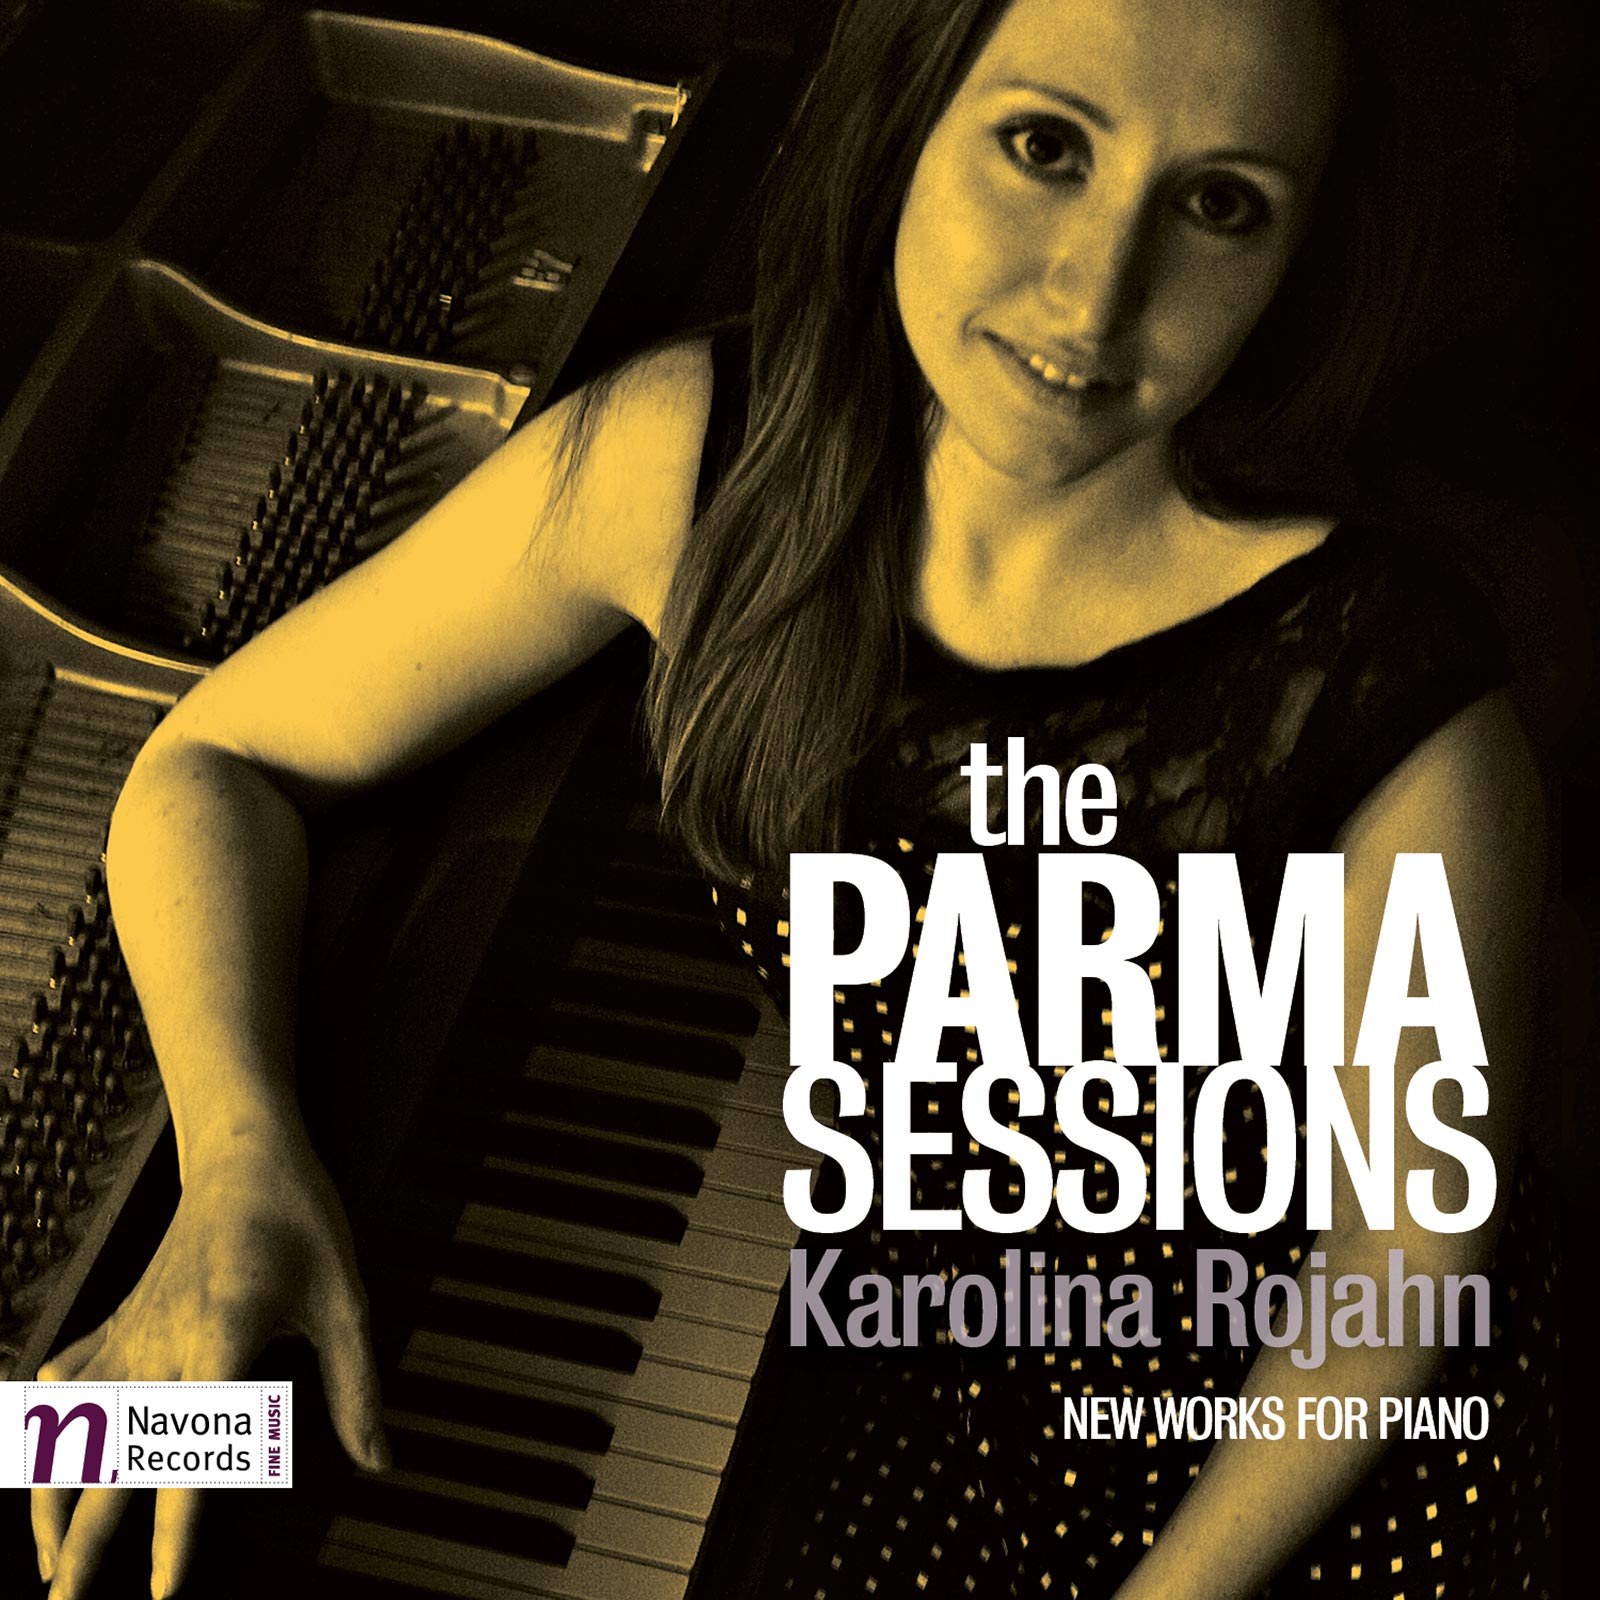 The PARMA Sessions: Karolina Rojahn